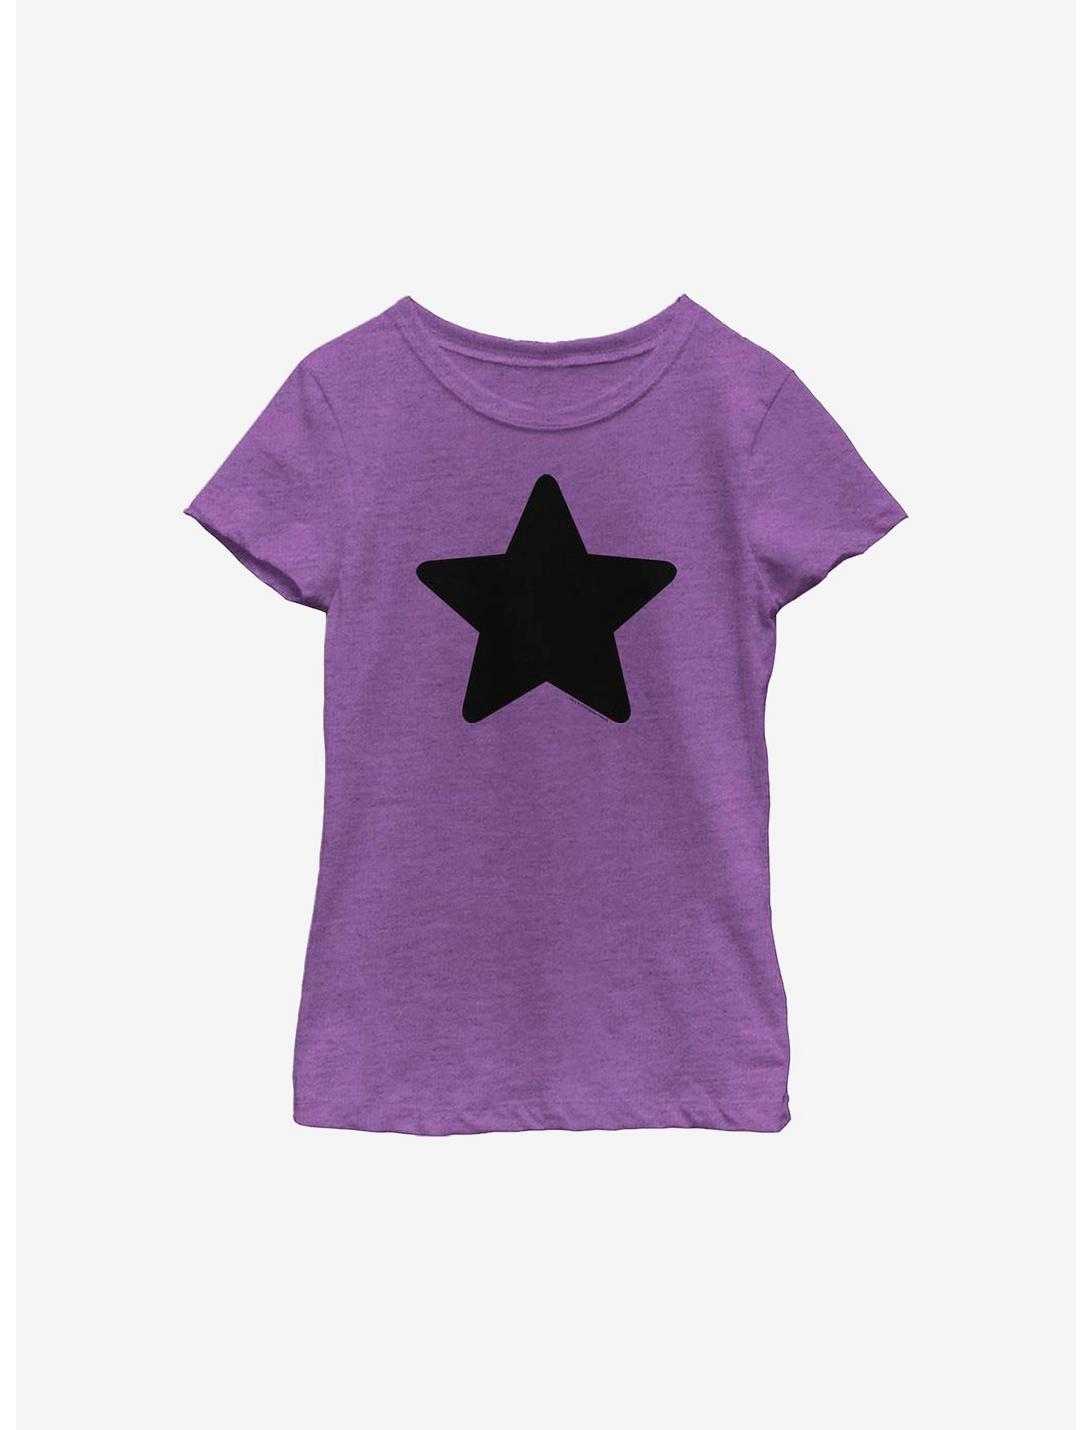 Steven Universe Amethyst Star Youth Girls T-Shirt, PURPLE BERRY, hi-res